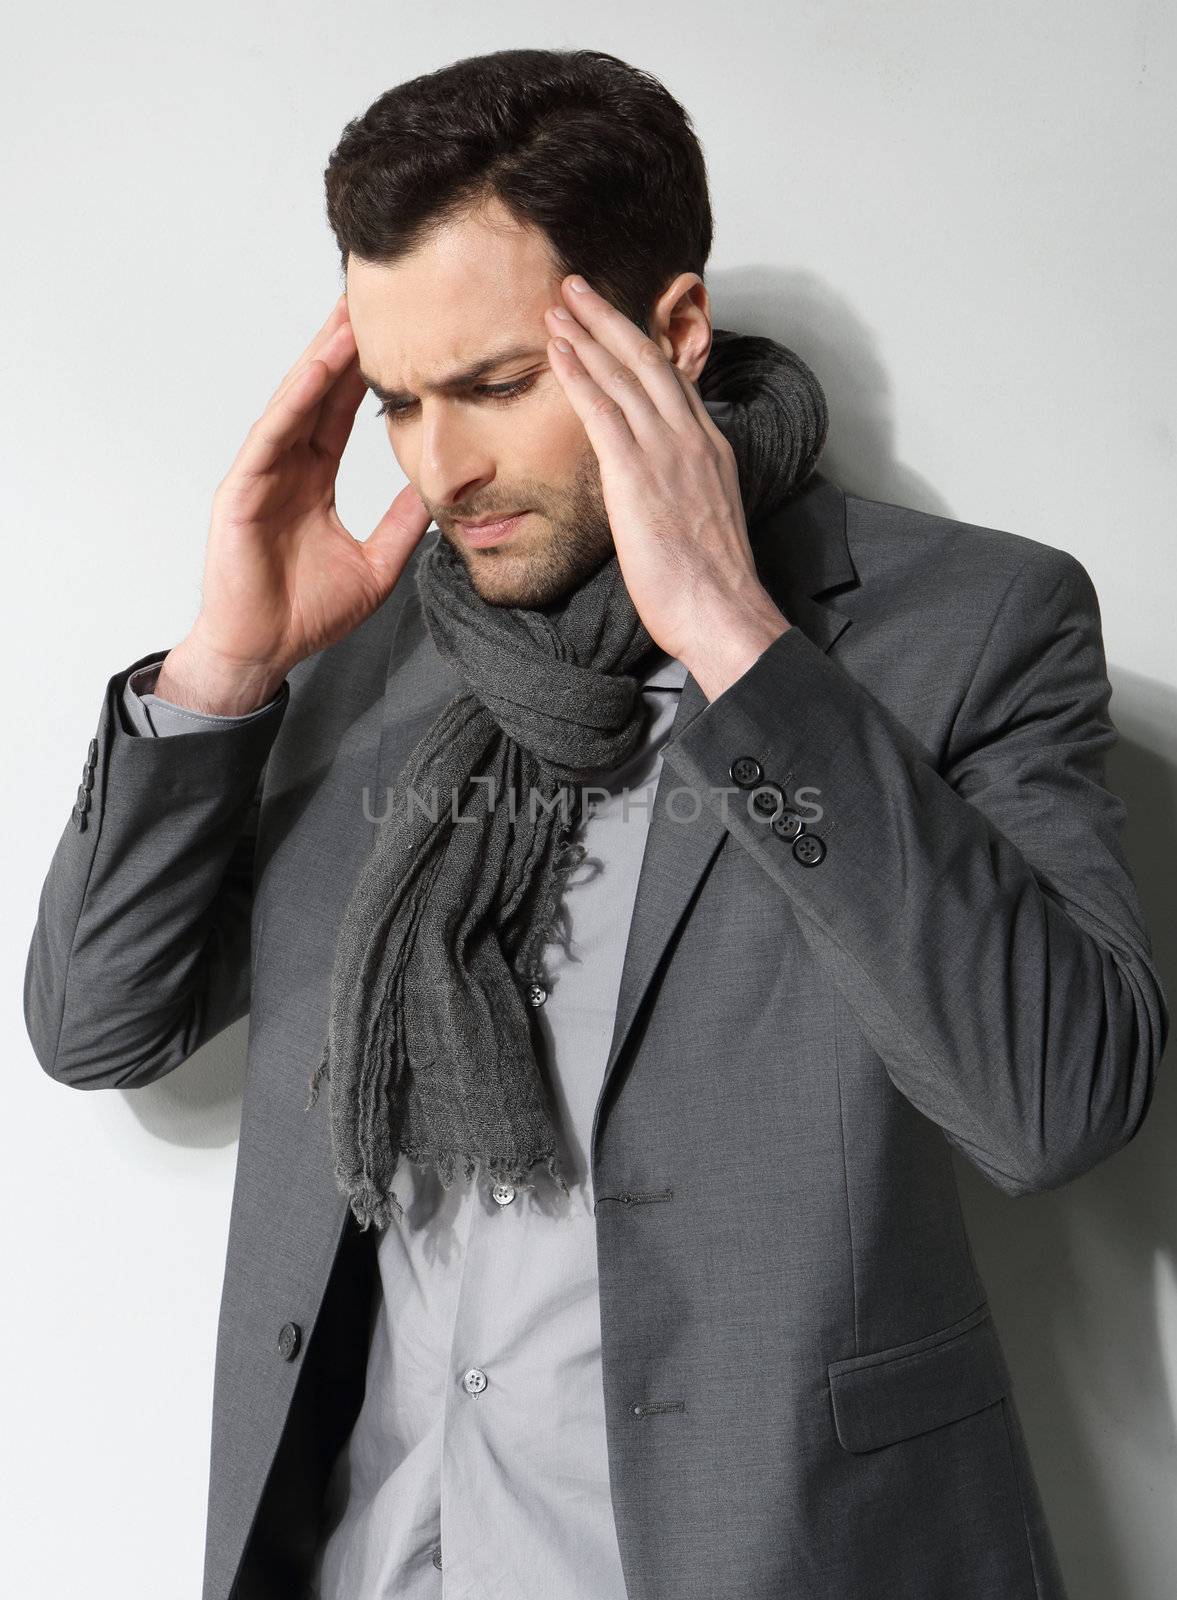 Stressed businessman with a headache on a gray background by robert_przybysz